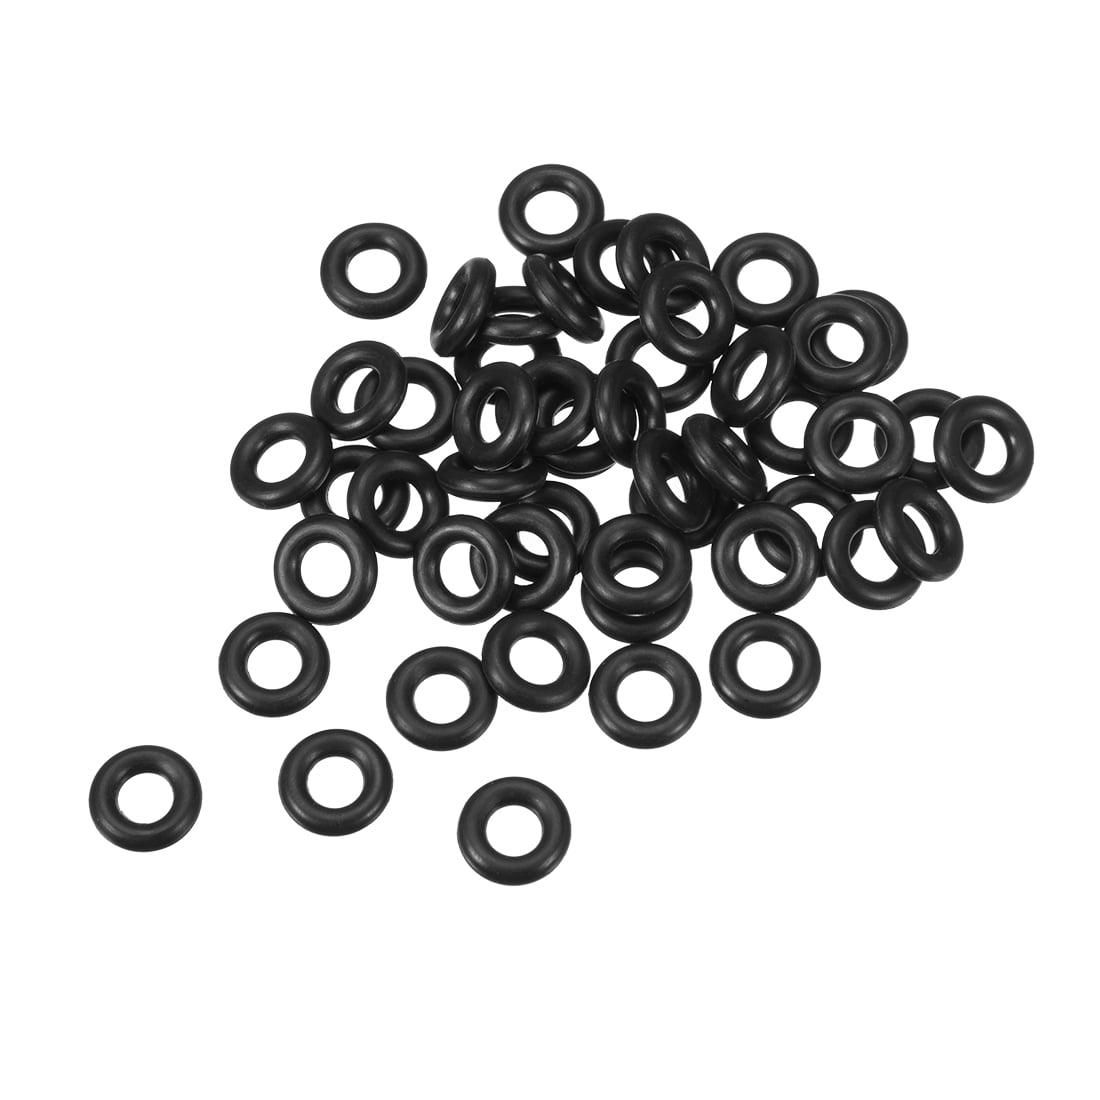 O-Rings Nitrile Rubber 9mm x 17mm x 4mm Seal Rings Sealing Gasket 10pcs -  Walmart.com